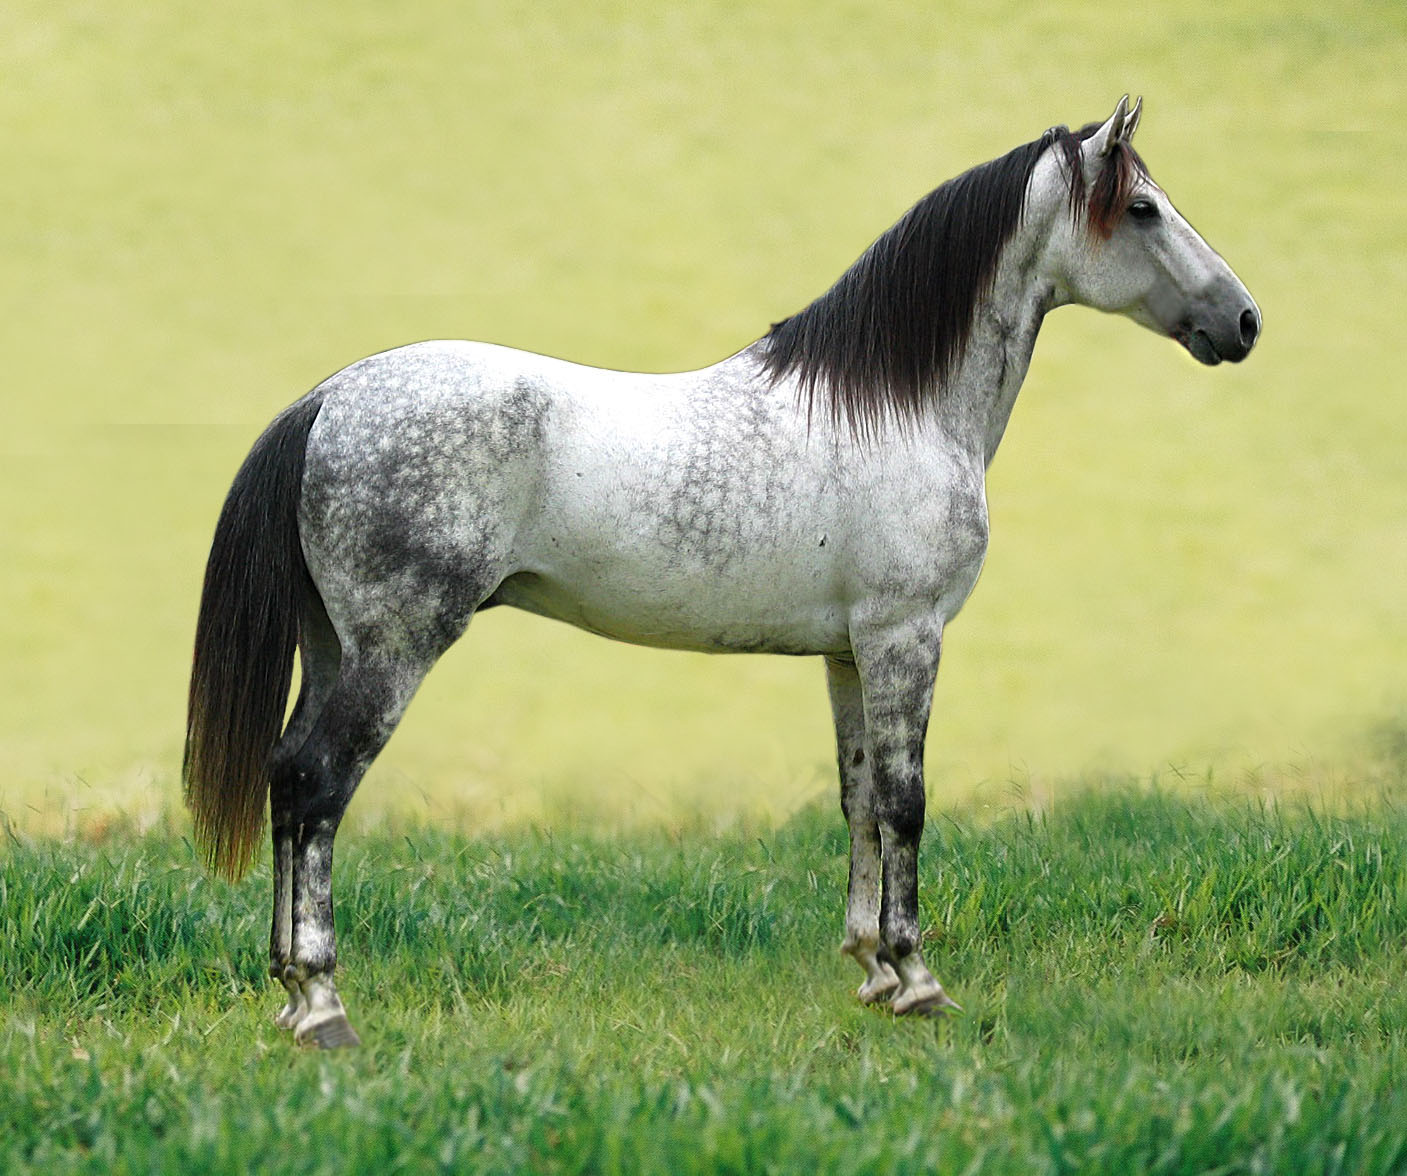 American horse breeds